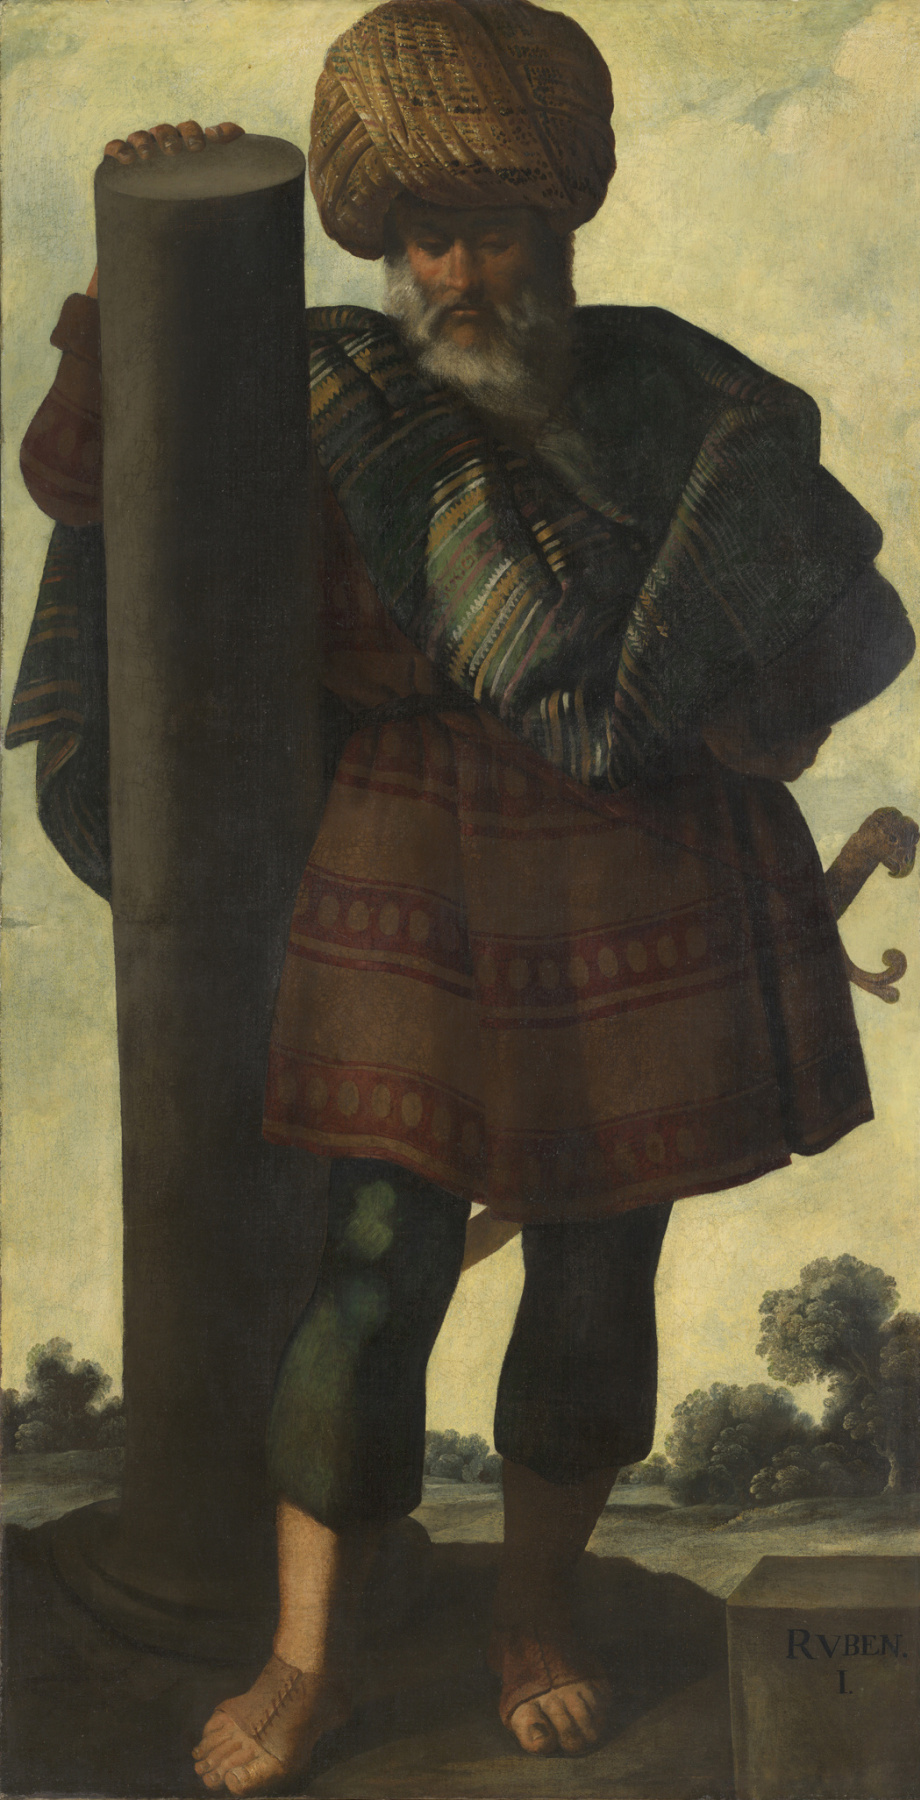 Francisco de Zurbaran. Reuben from the series "Jacob and his sons"